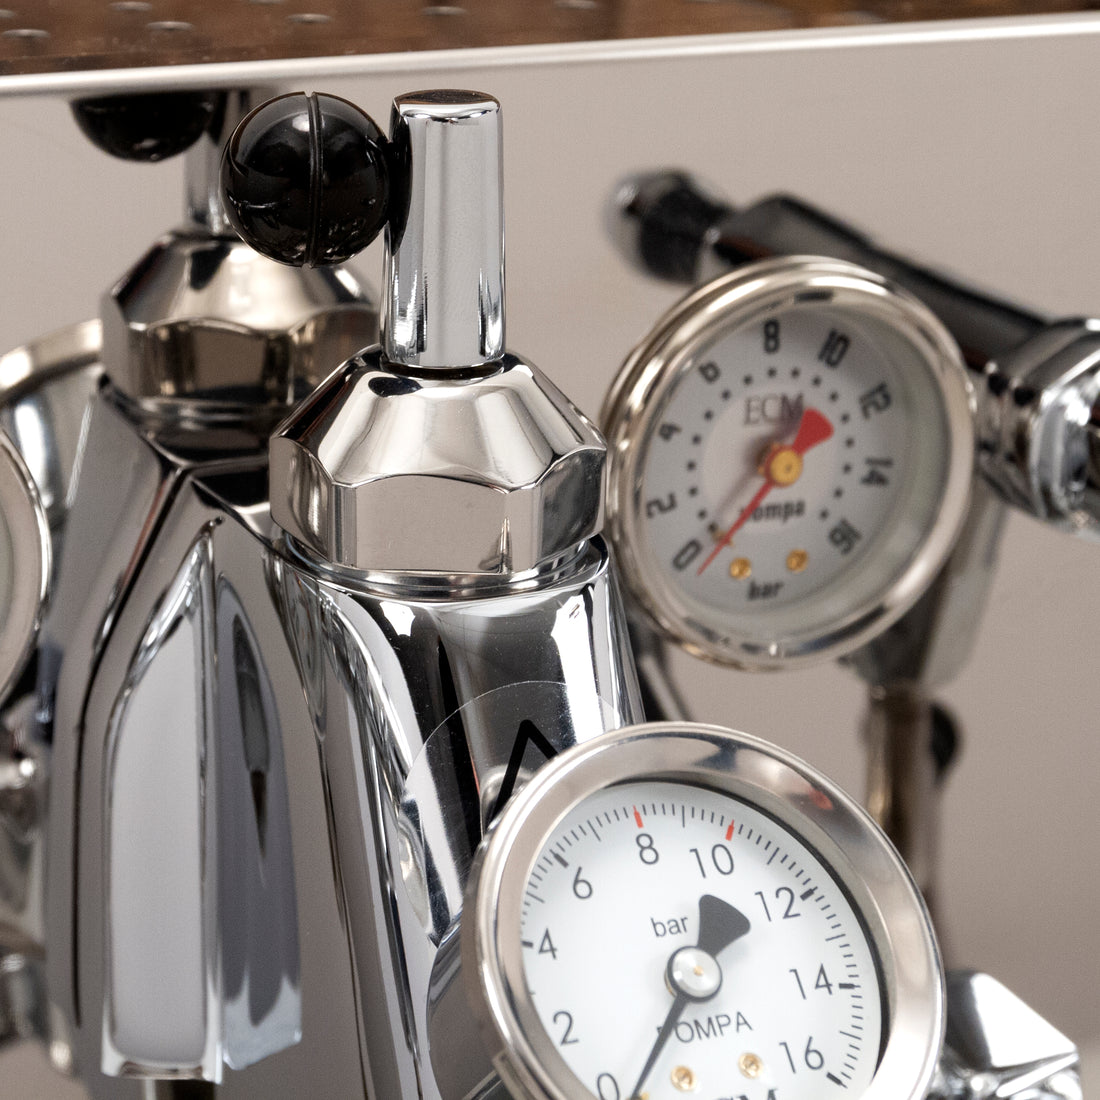 Brew pressure gauge